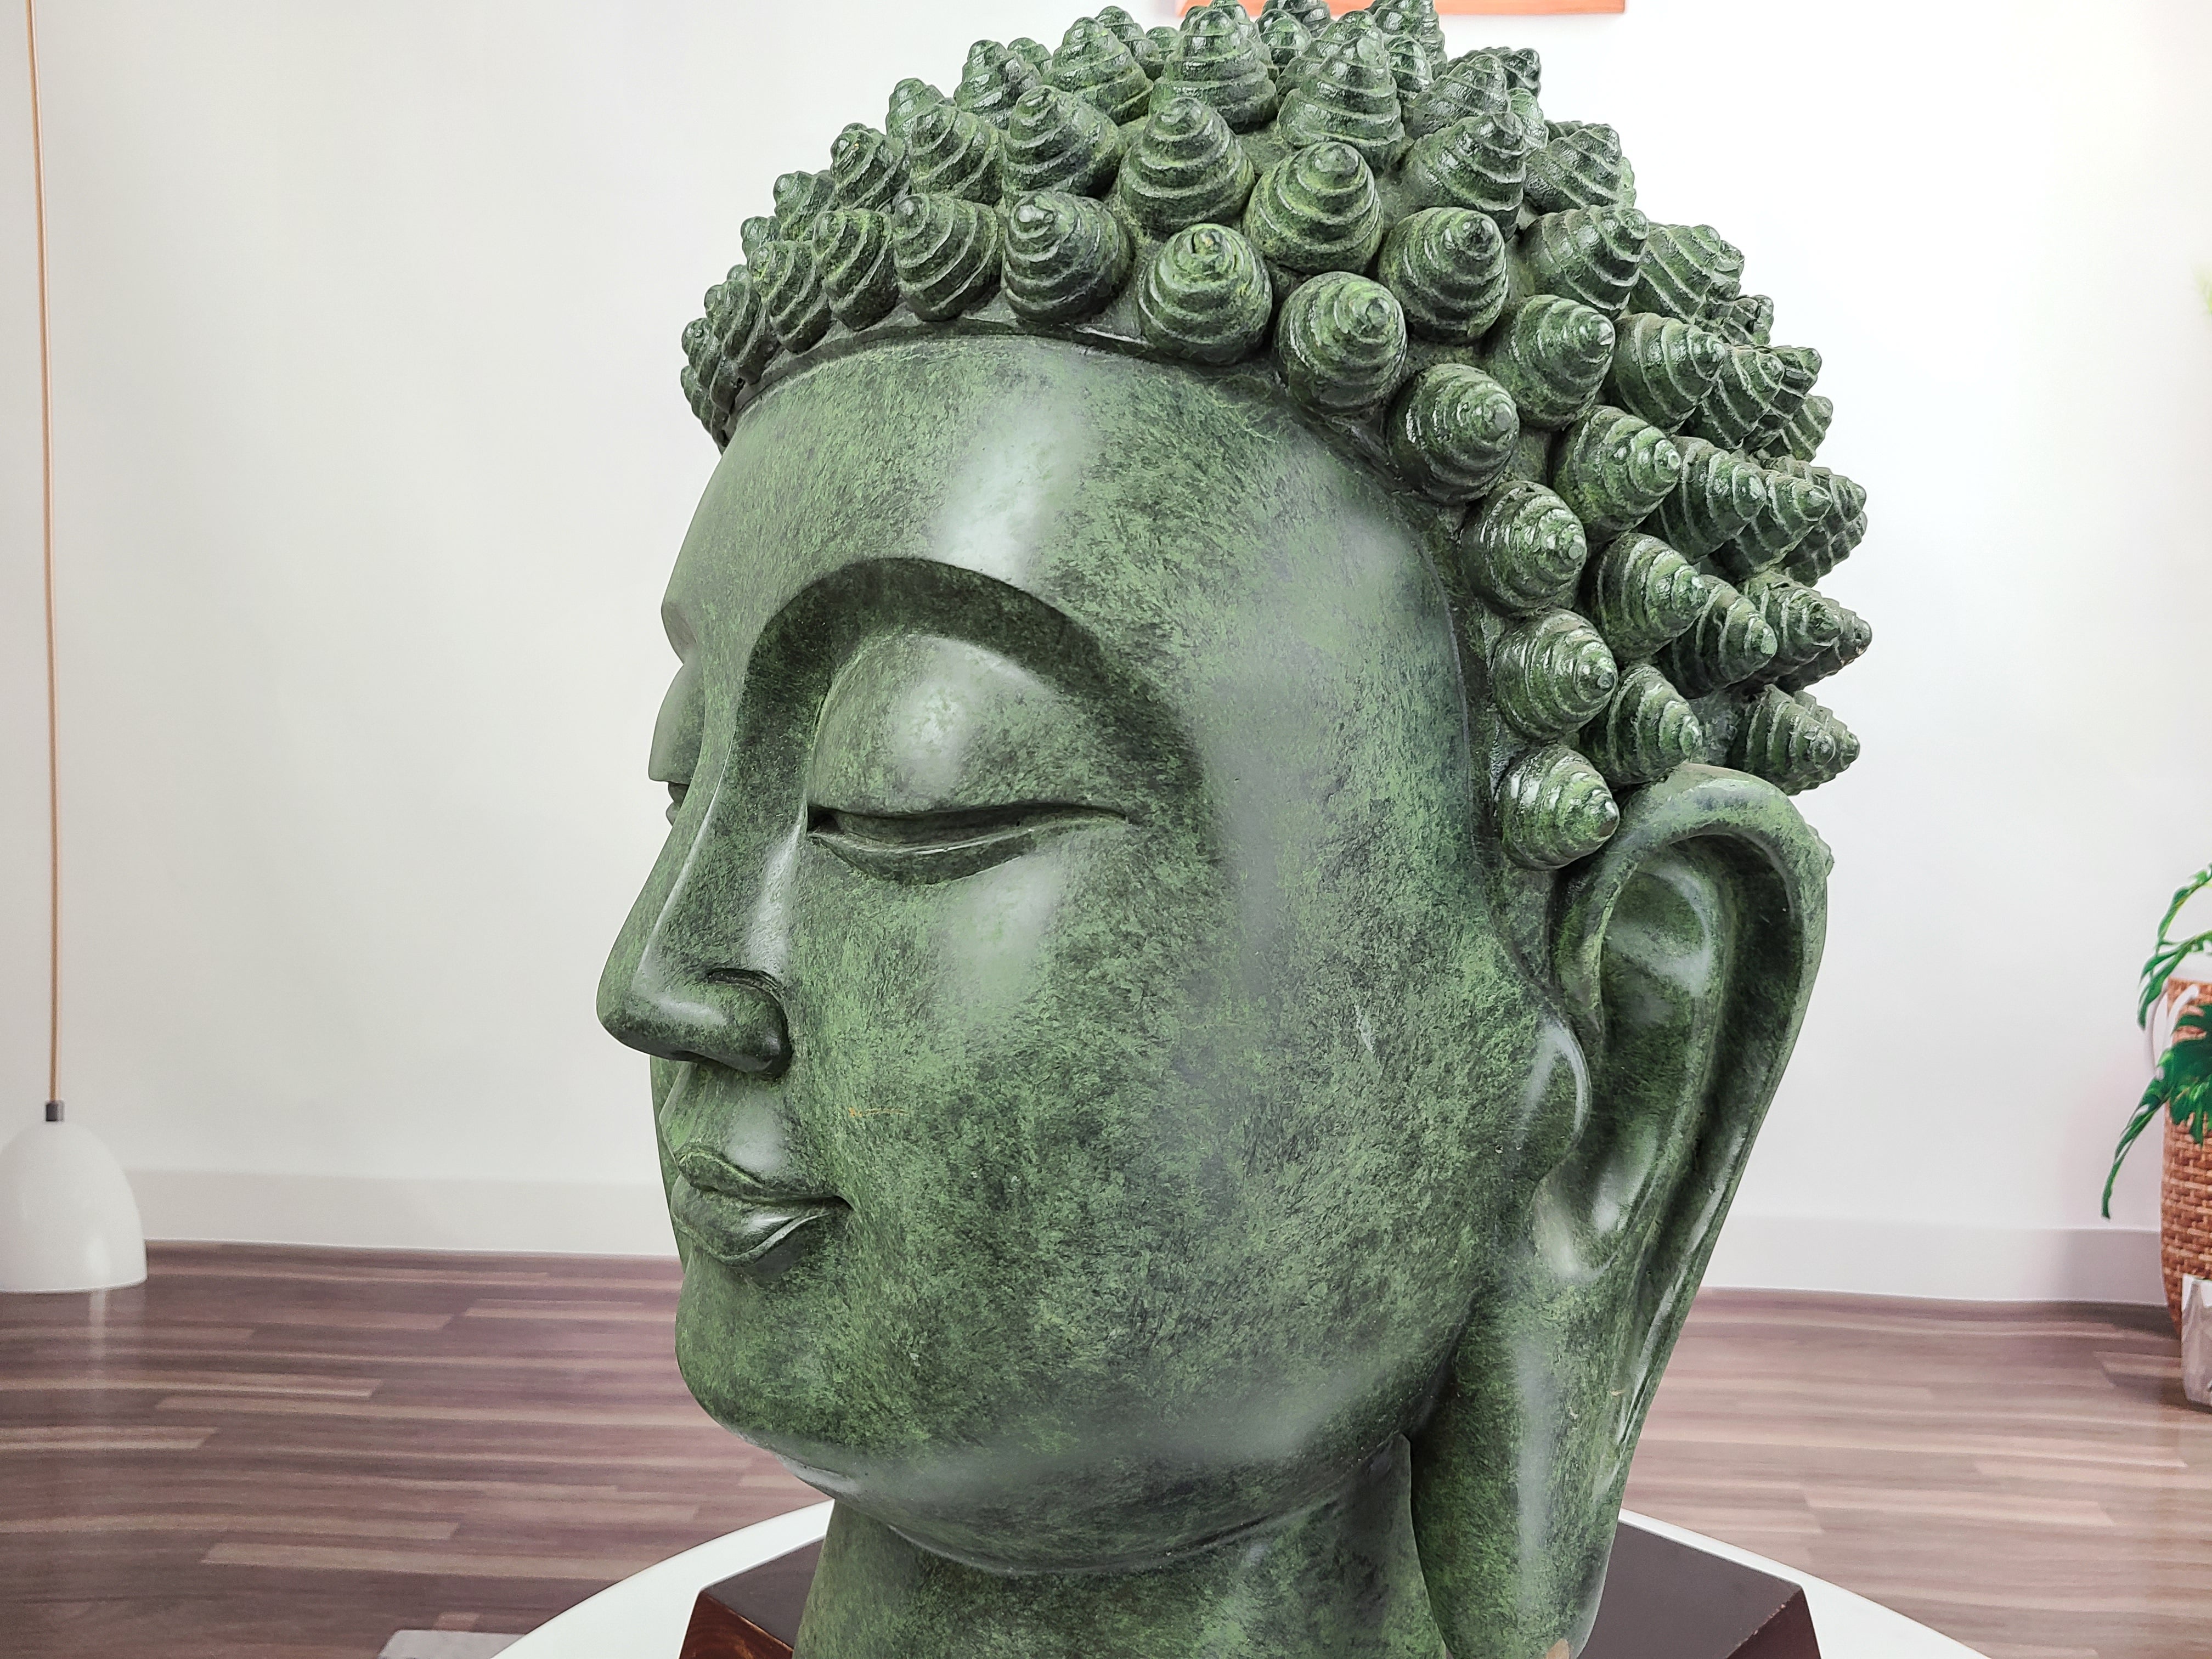 Top Collection - Meditation Shakyamuni Buddha Bronze Statue - 100% Pure Bronze Casting 17.5 '' Buddha Serene Decorative Sitting Indoor Outdoor Sculpture for Decor Gift